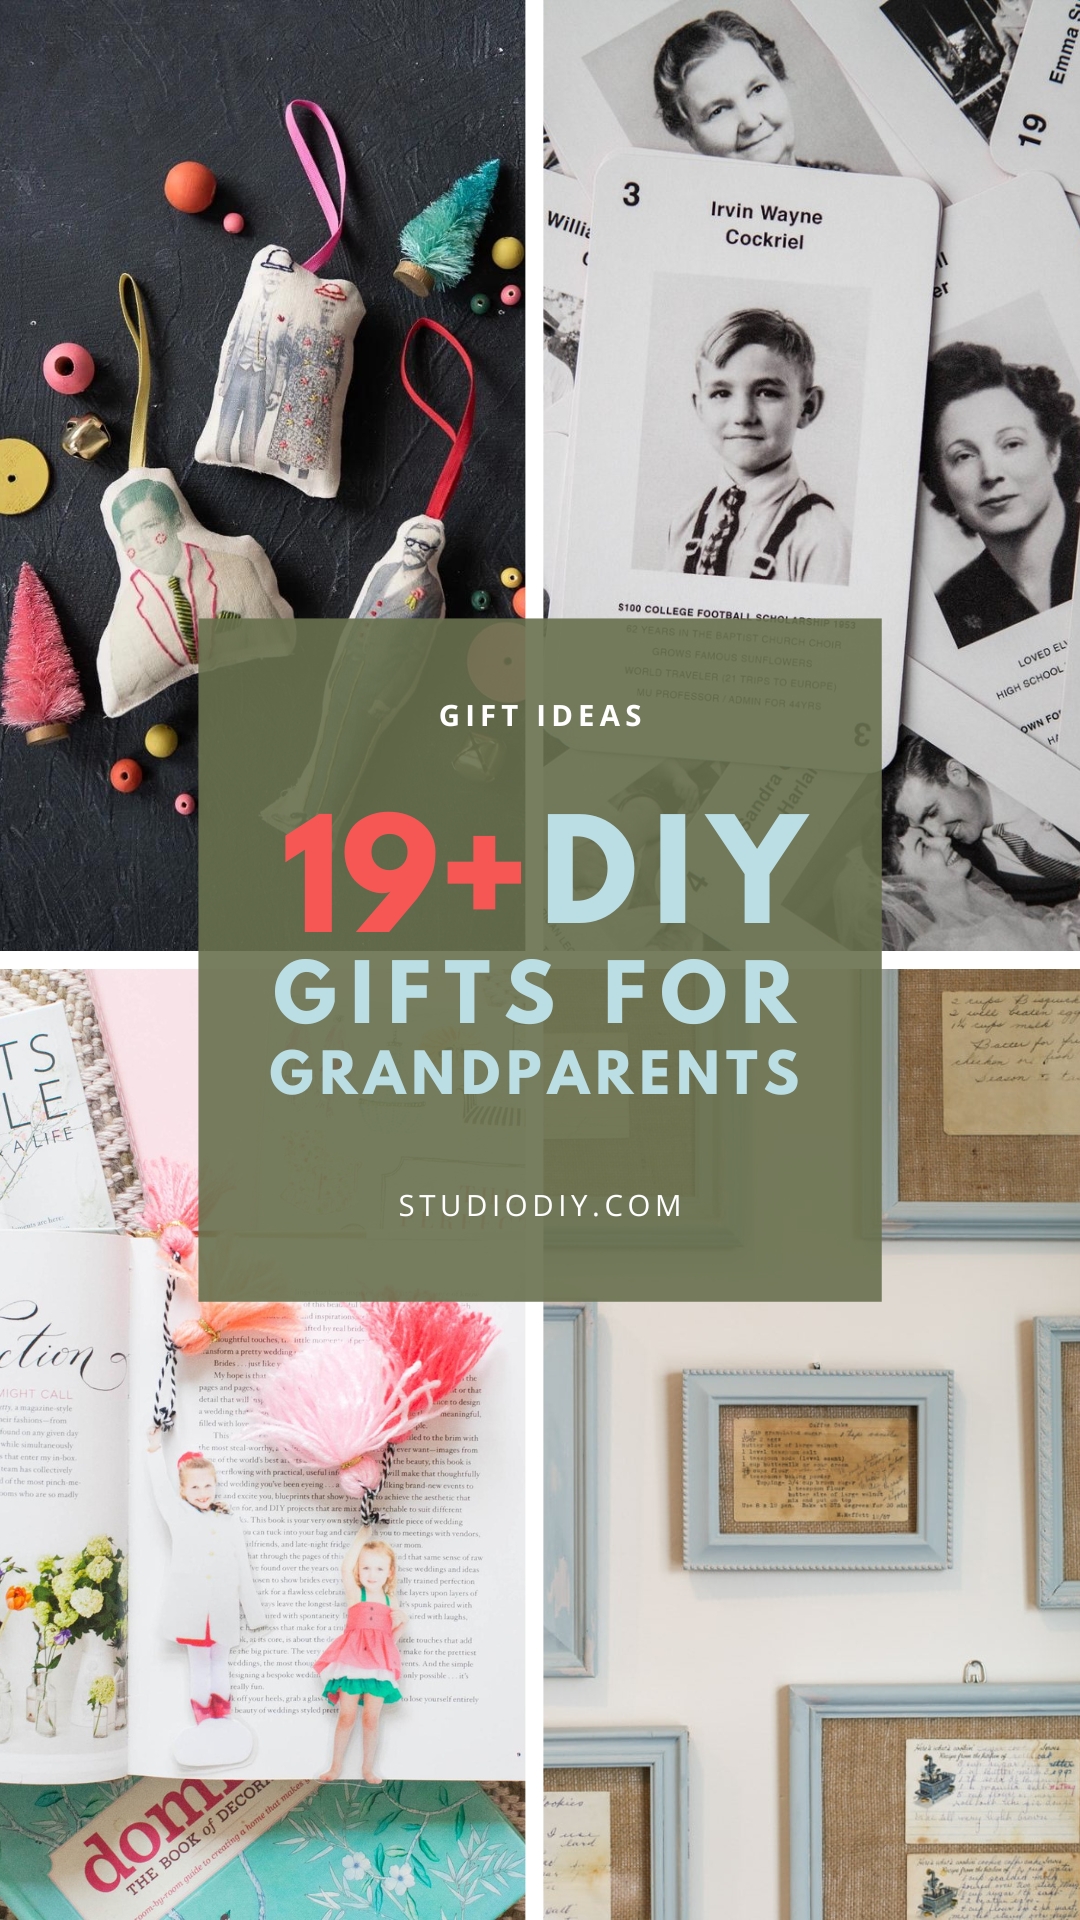 100 Handmade Gifts Under Five Dollars